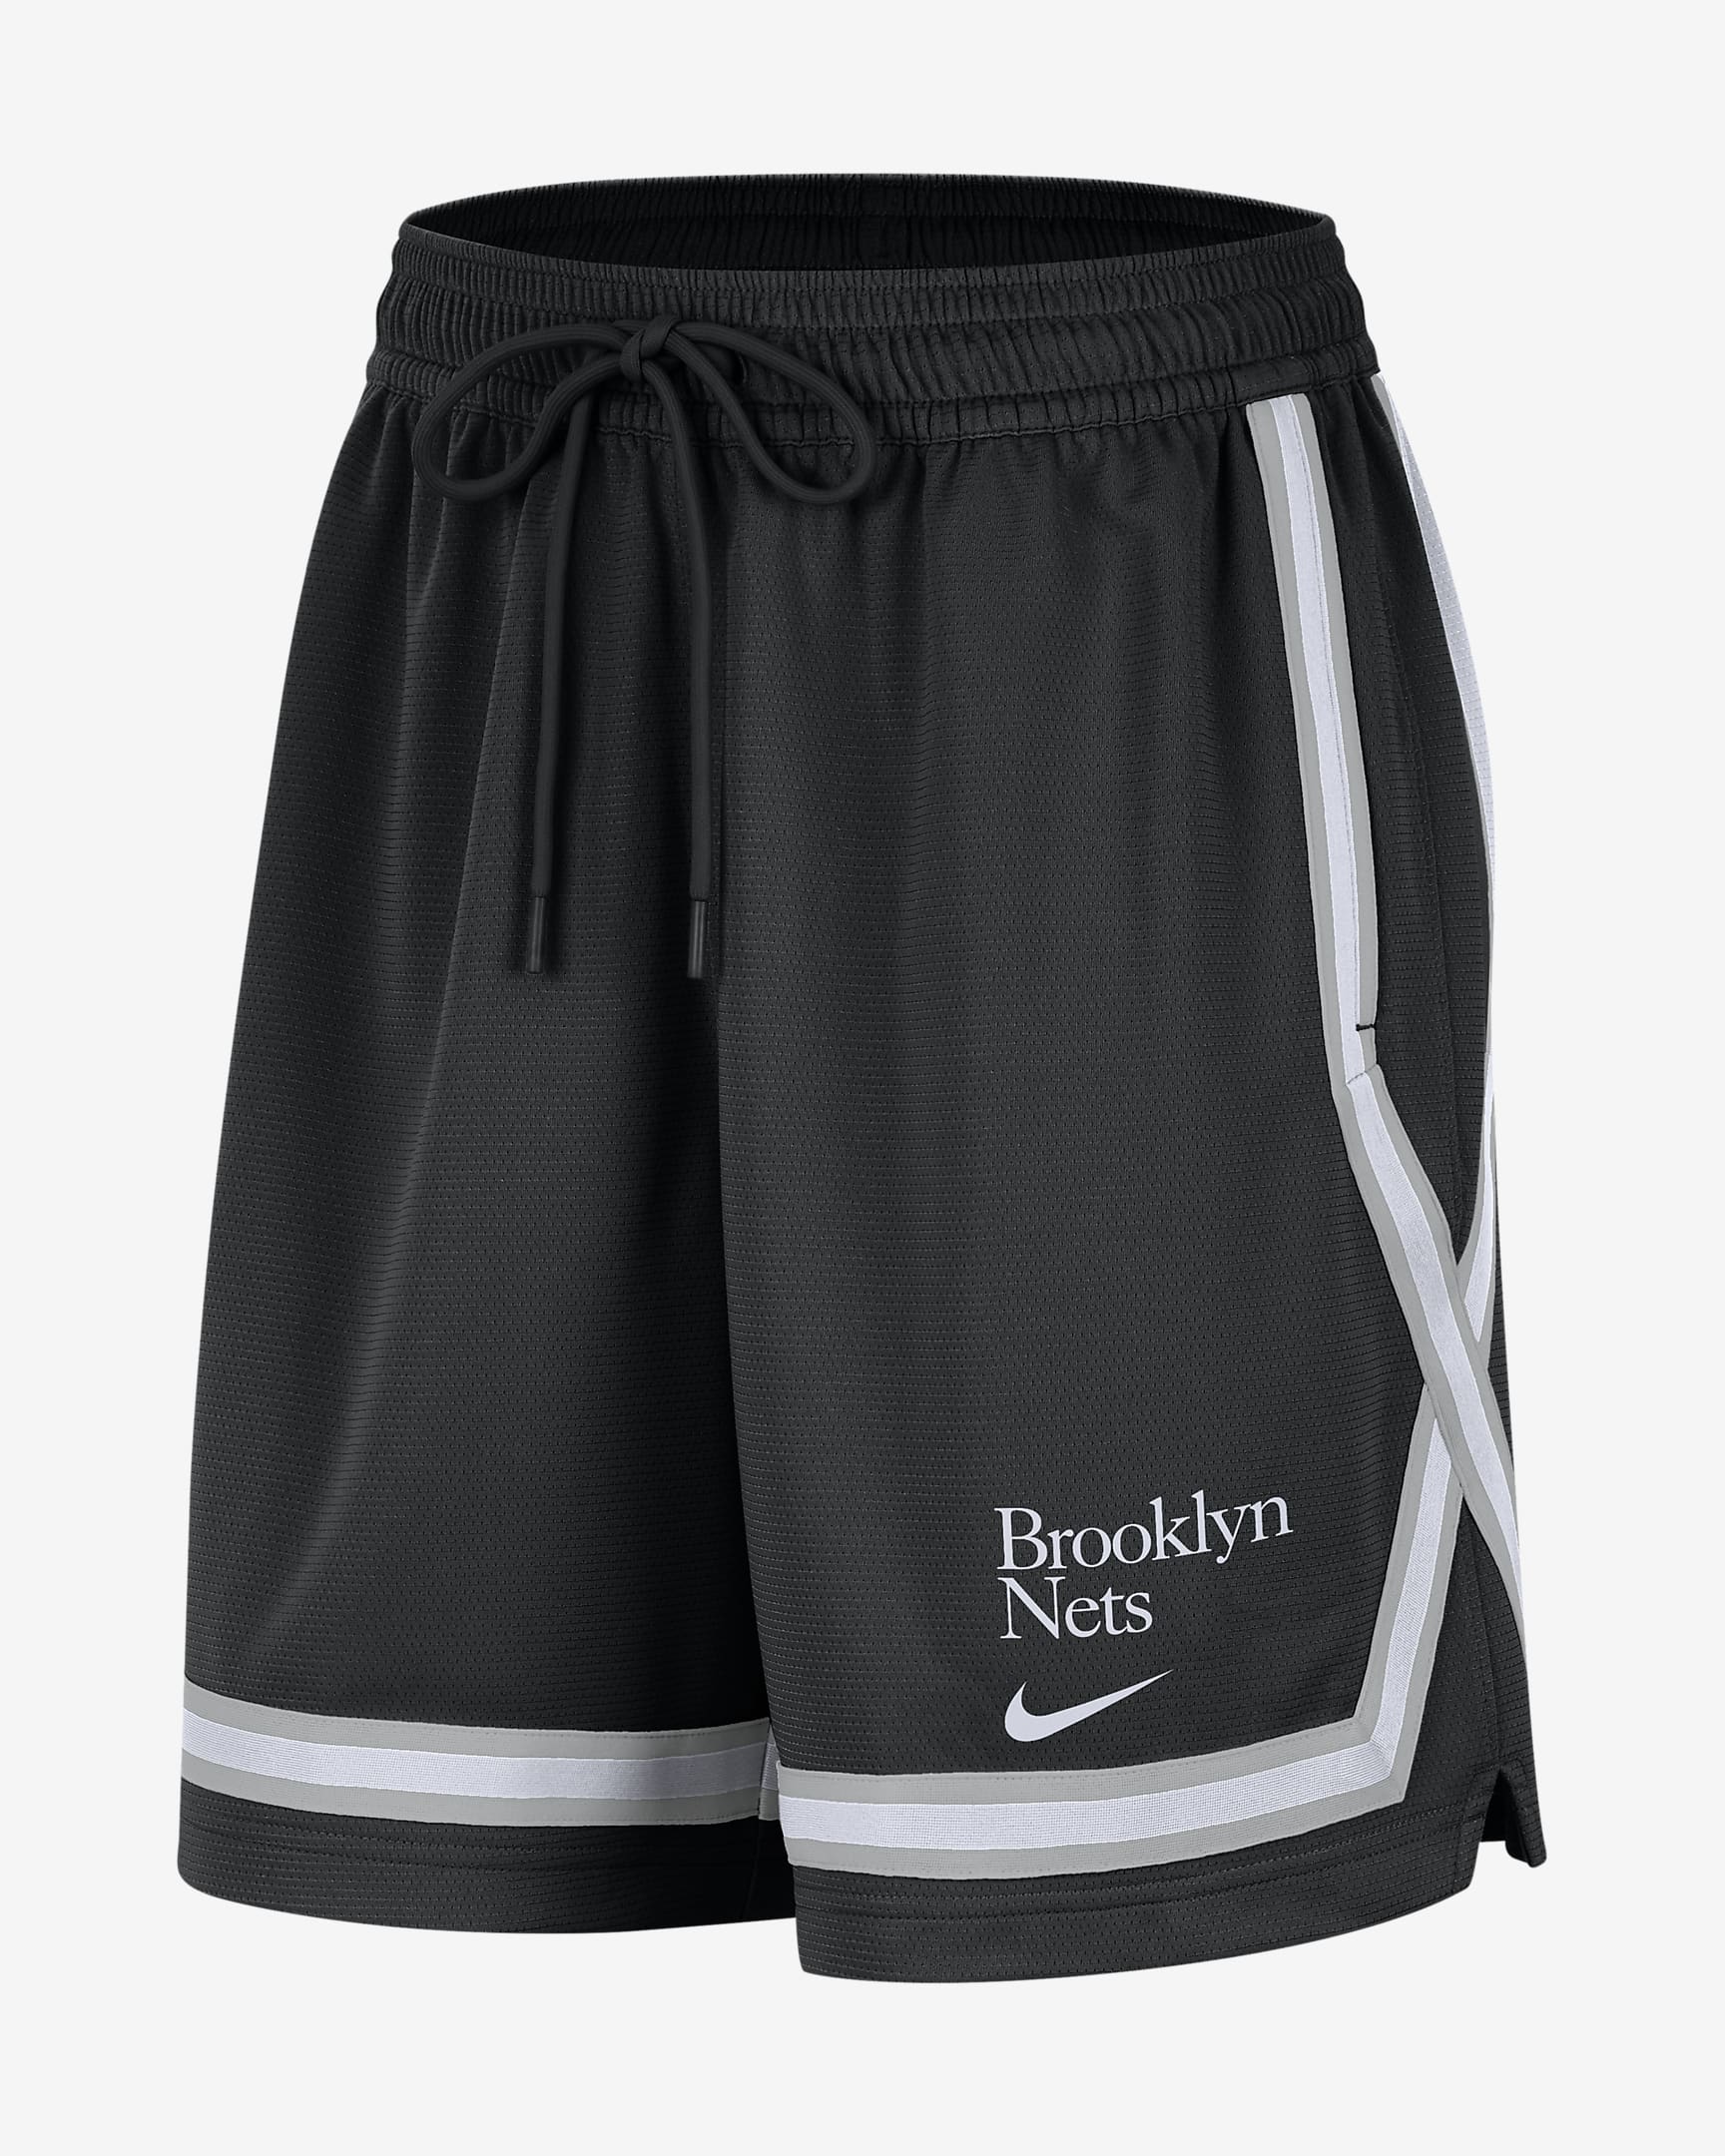 Brooklyn Nets Fly Crossover Women's Nike Dri-FIT NBA Basketball Graphic Shorts - Black/White/Flat Silver